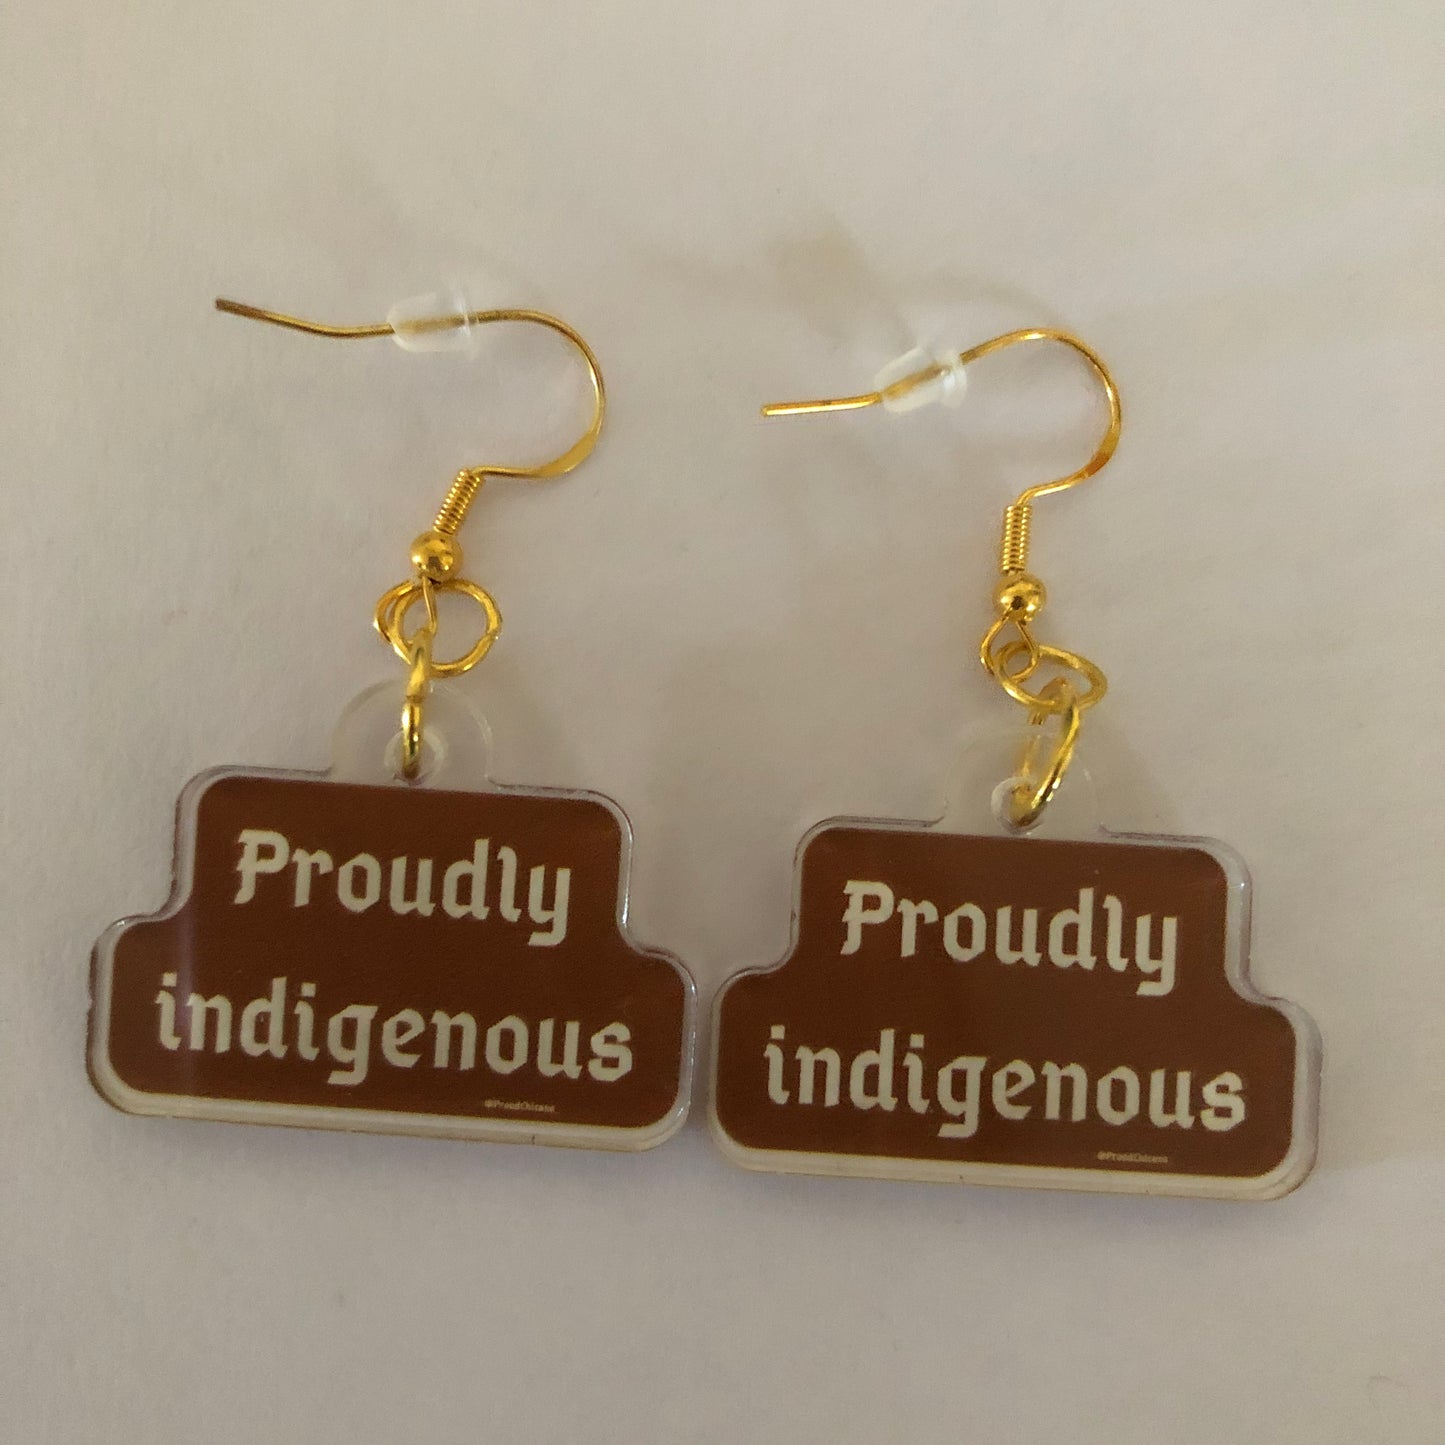 Proudly indigenous earrings